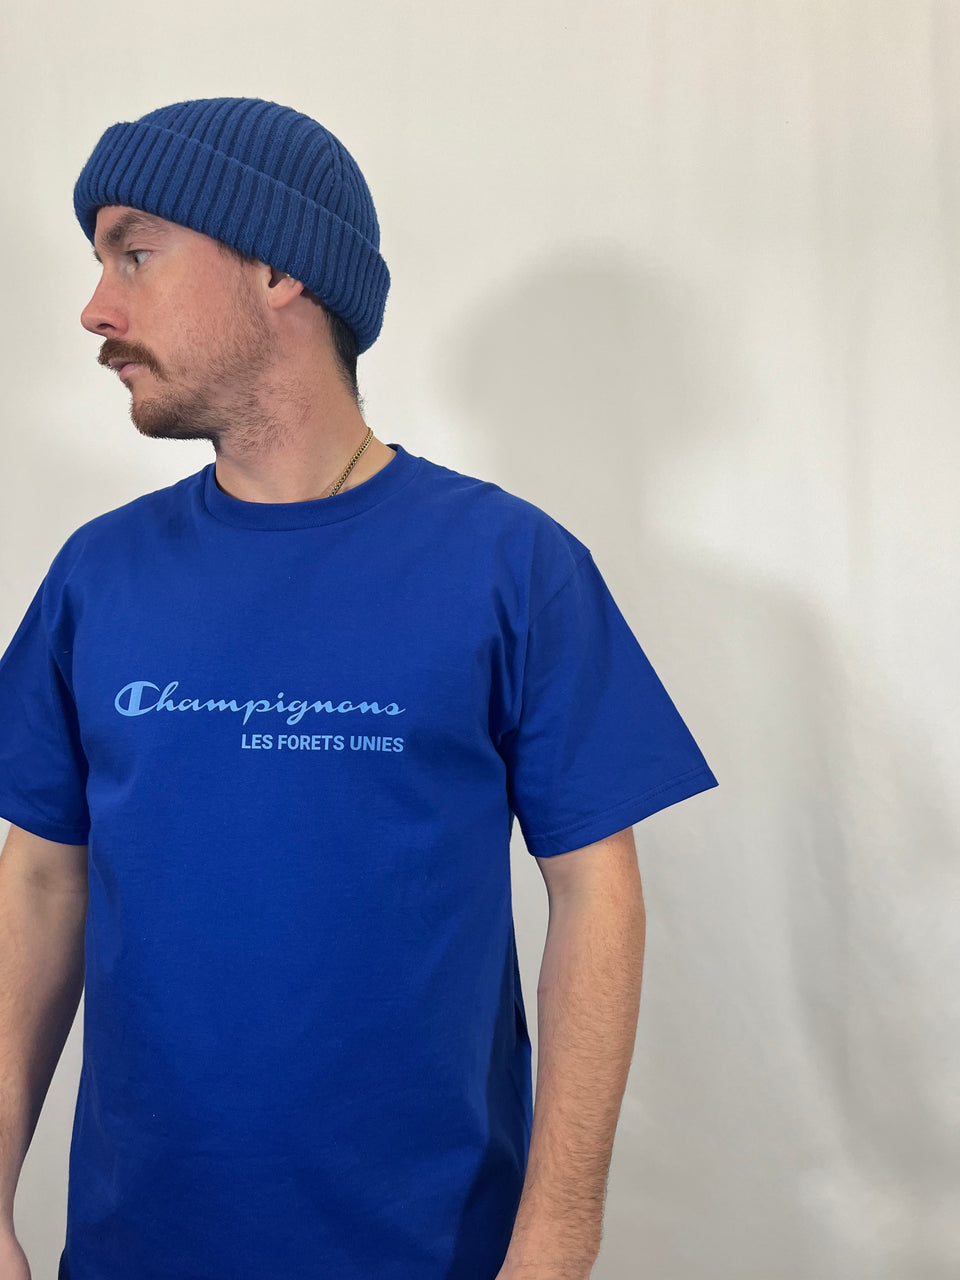 ERRATUM Champignons t-shirt en bleu